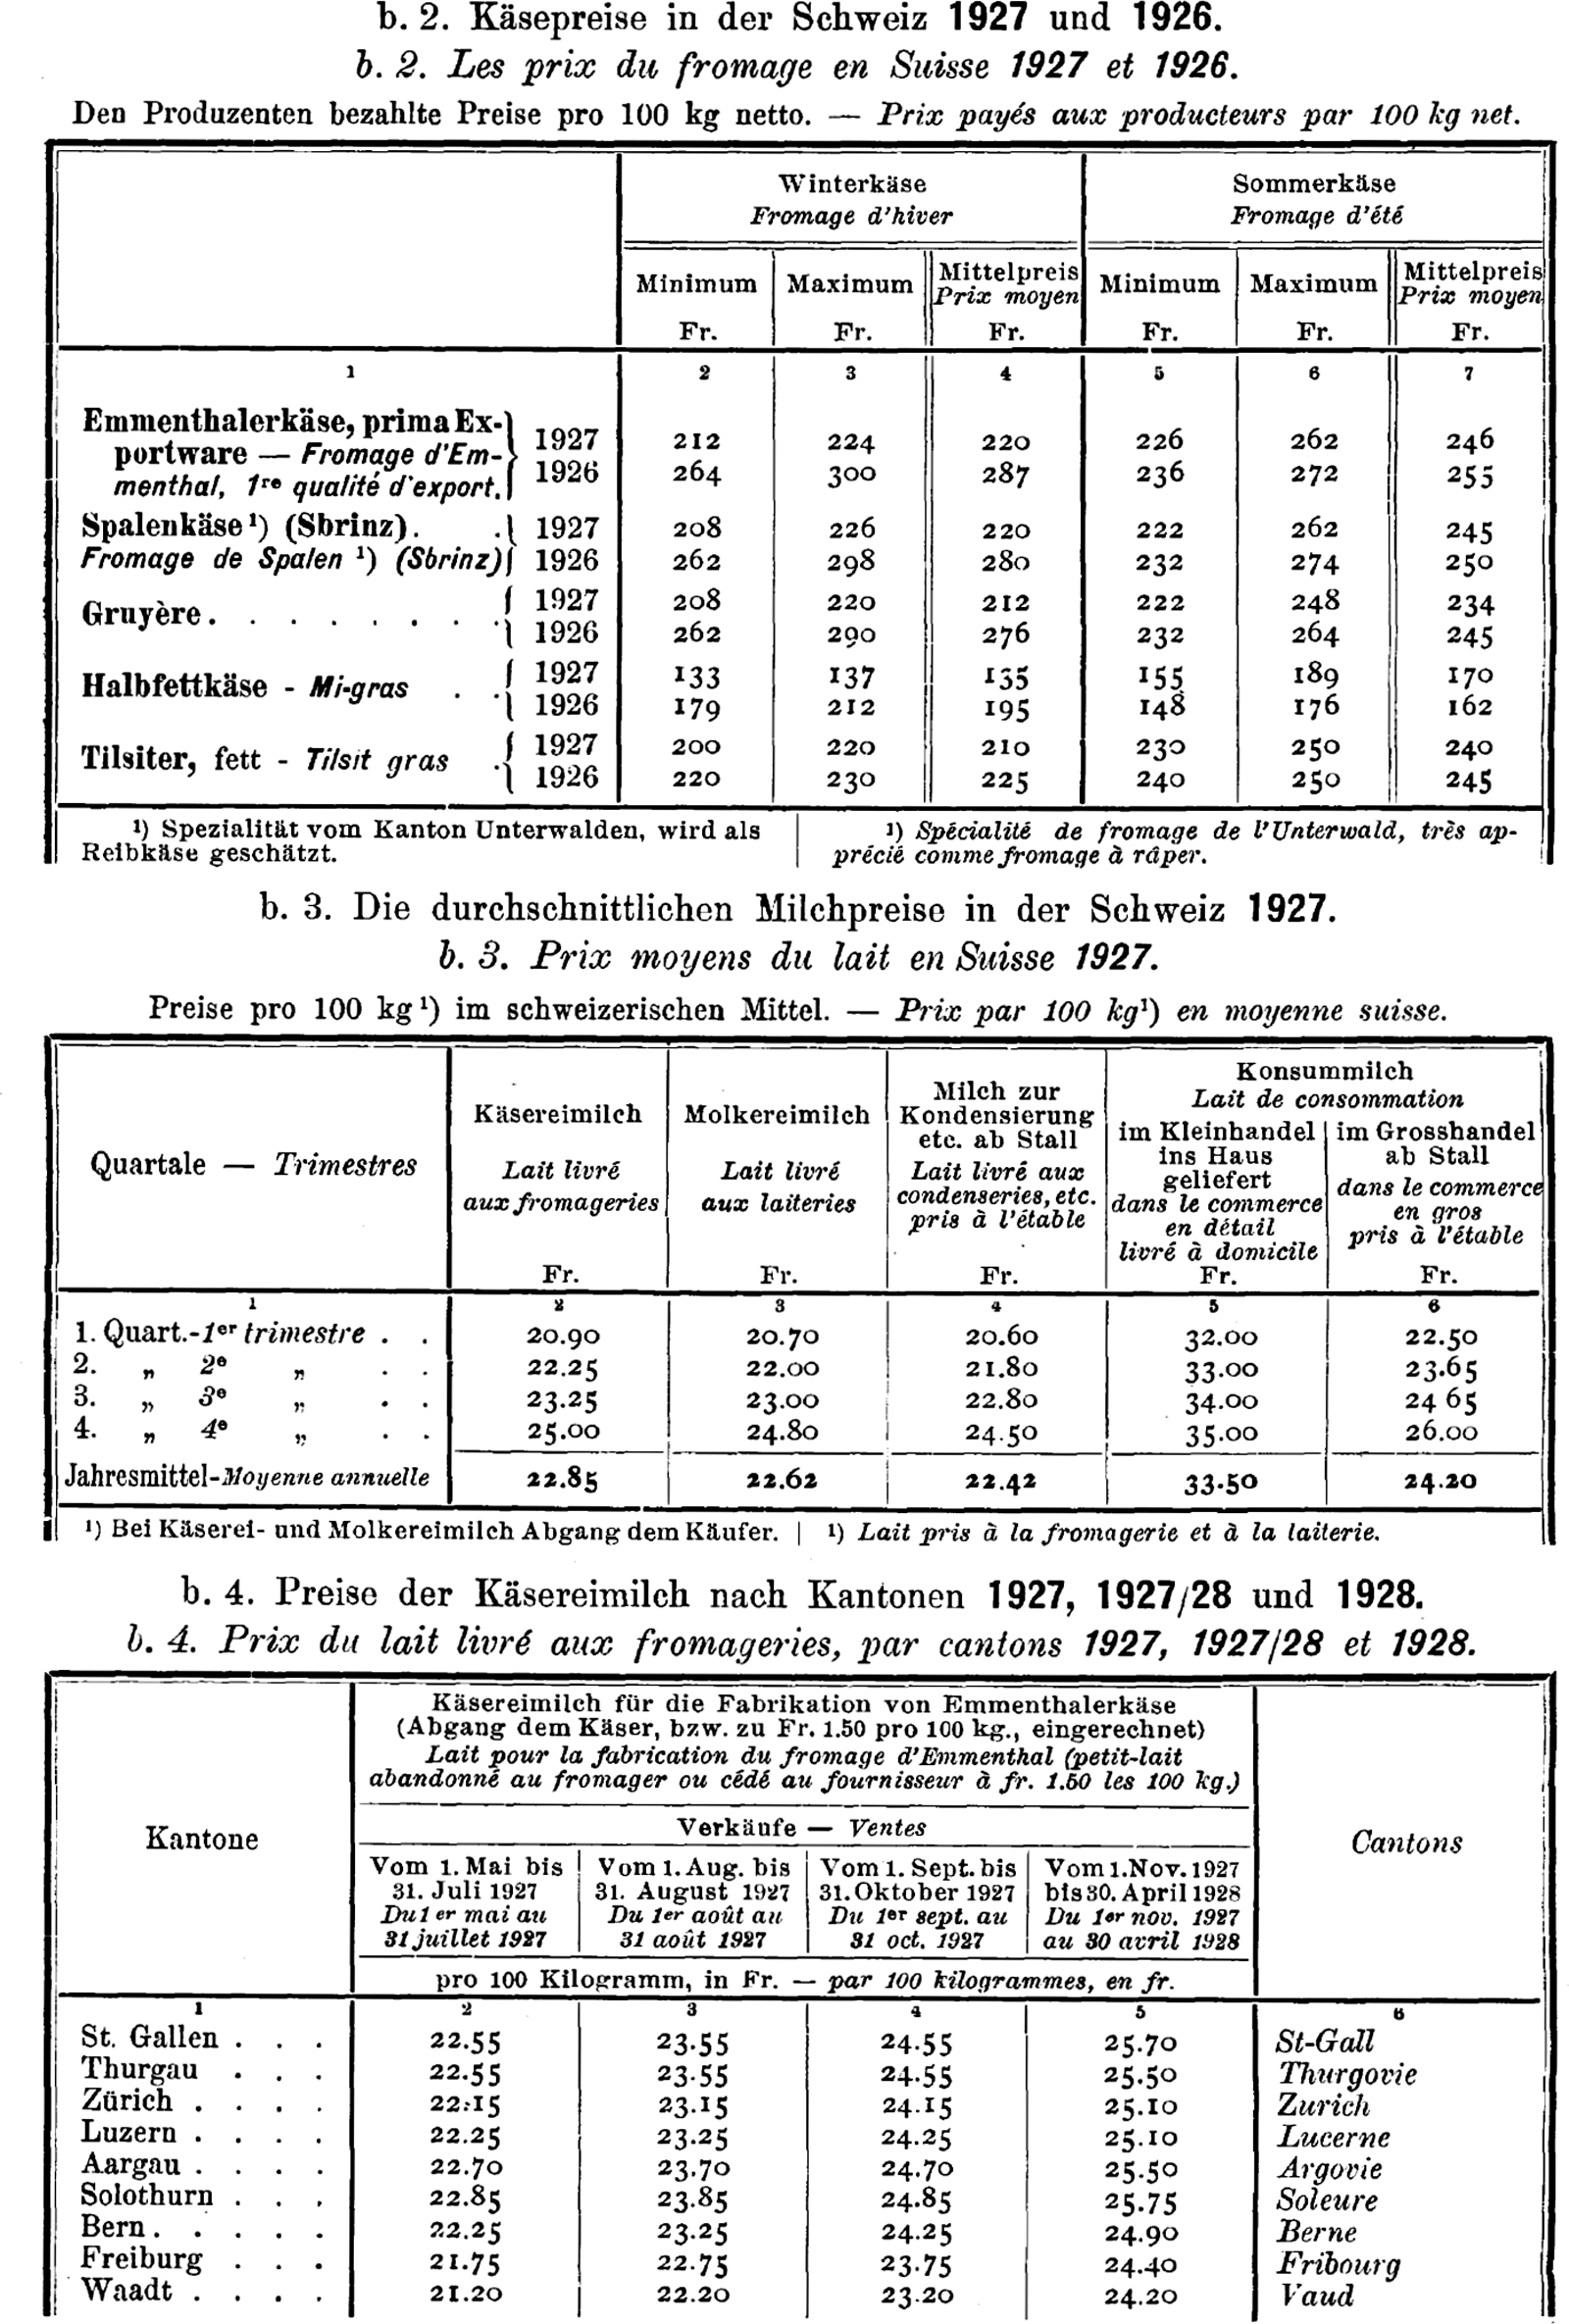 Stat. Jahrbuch 1927